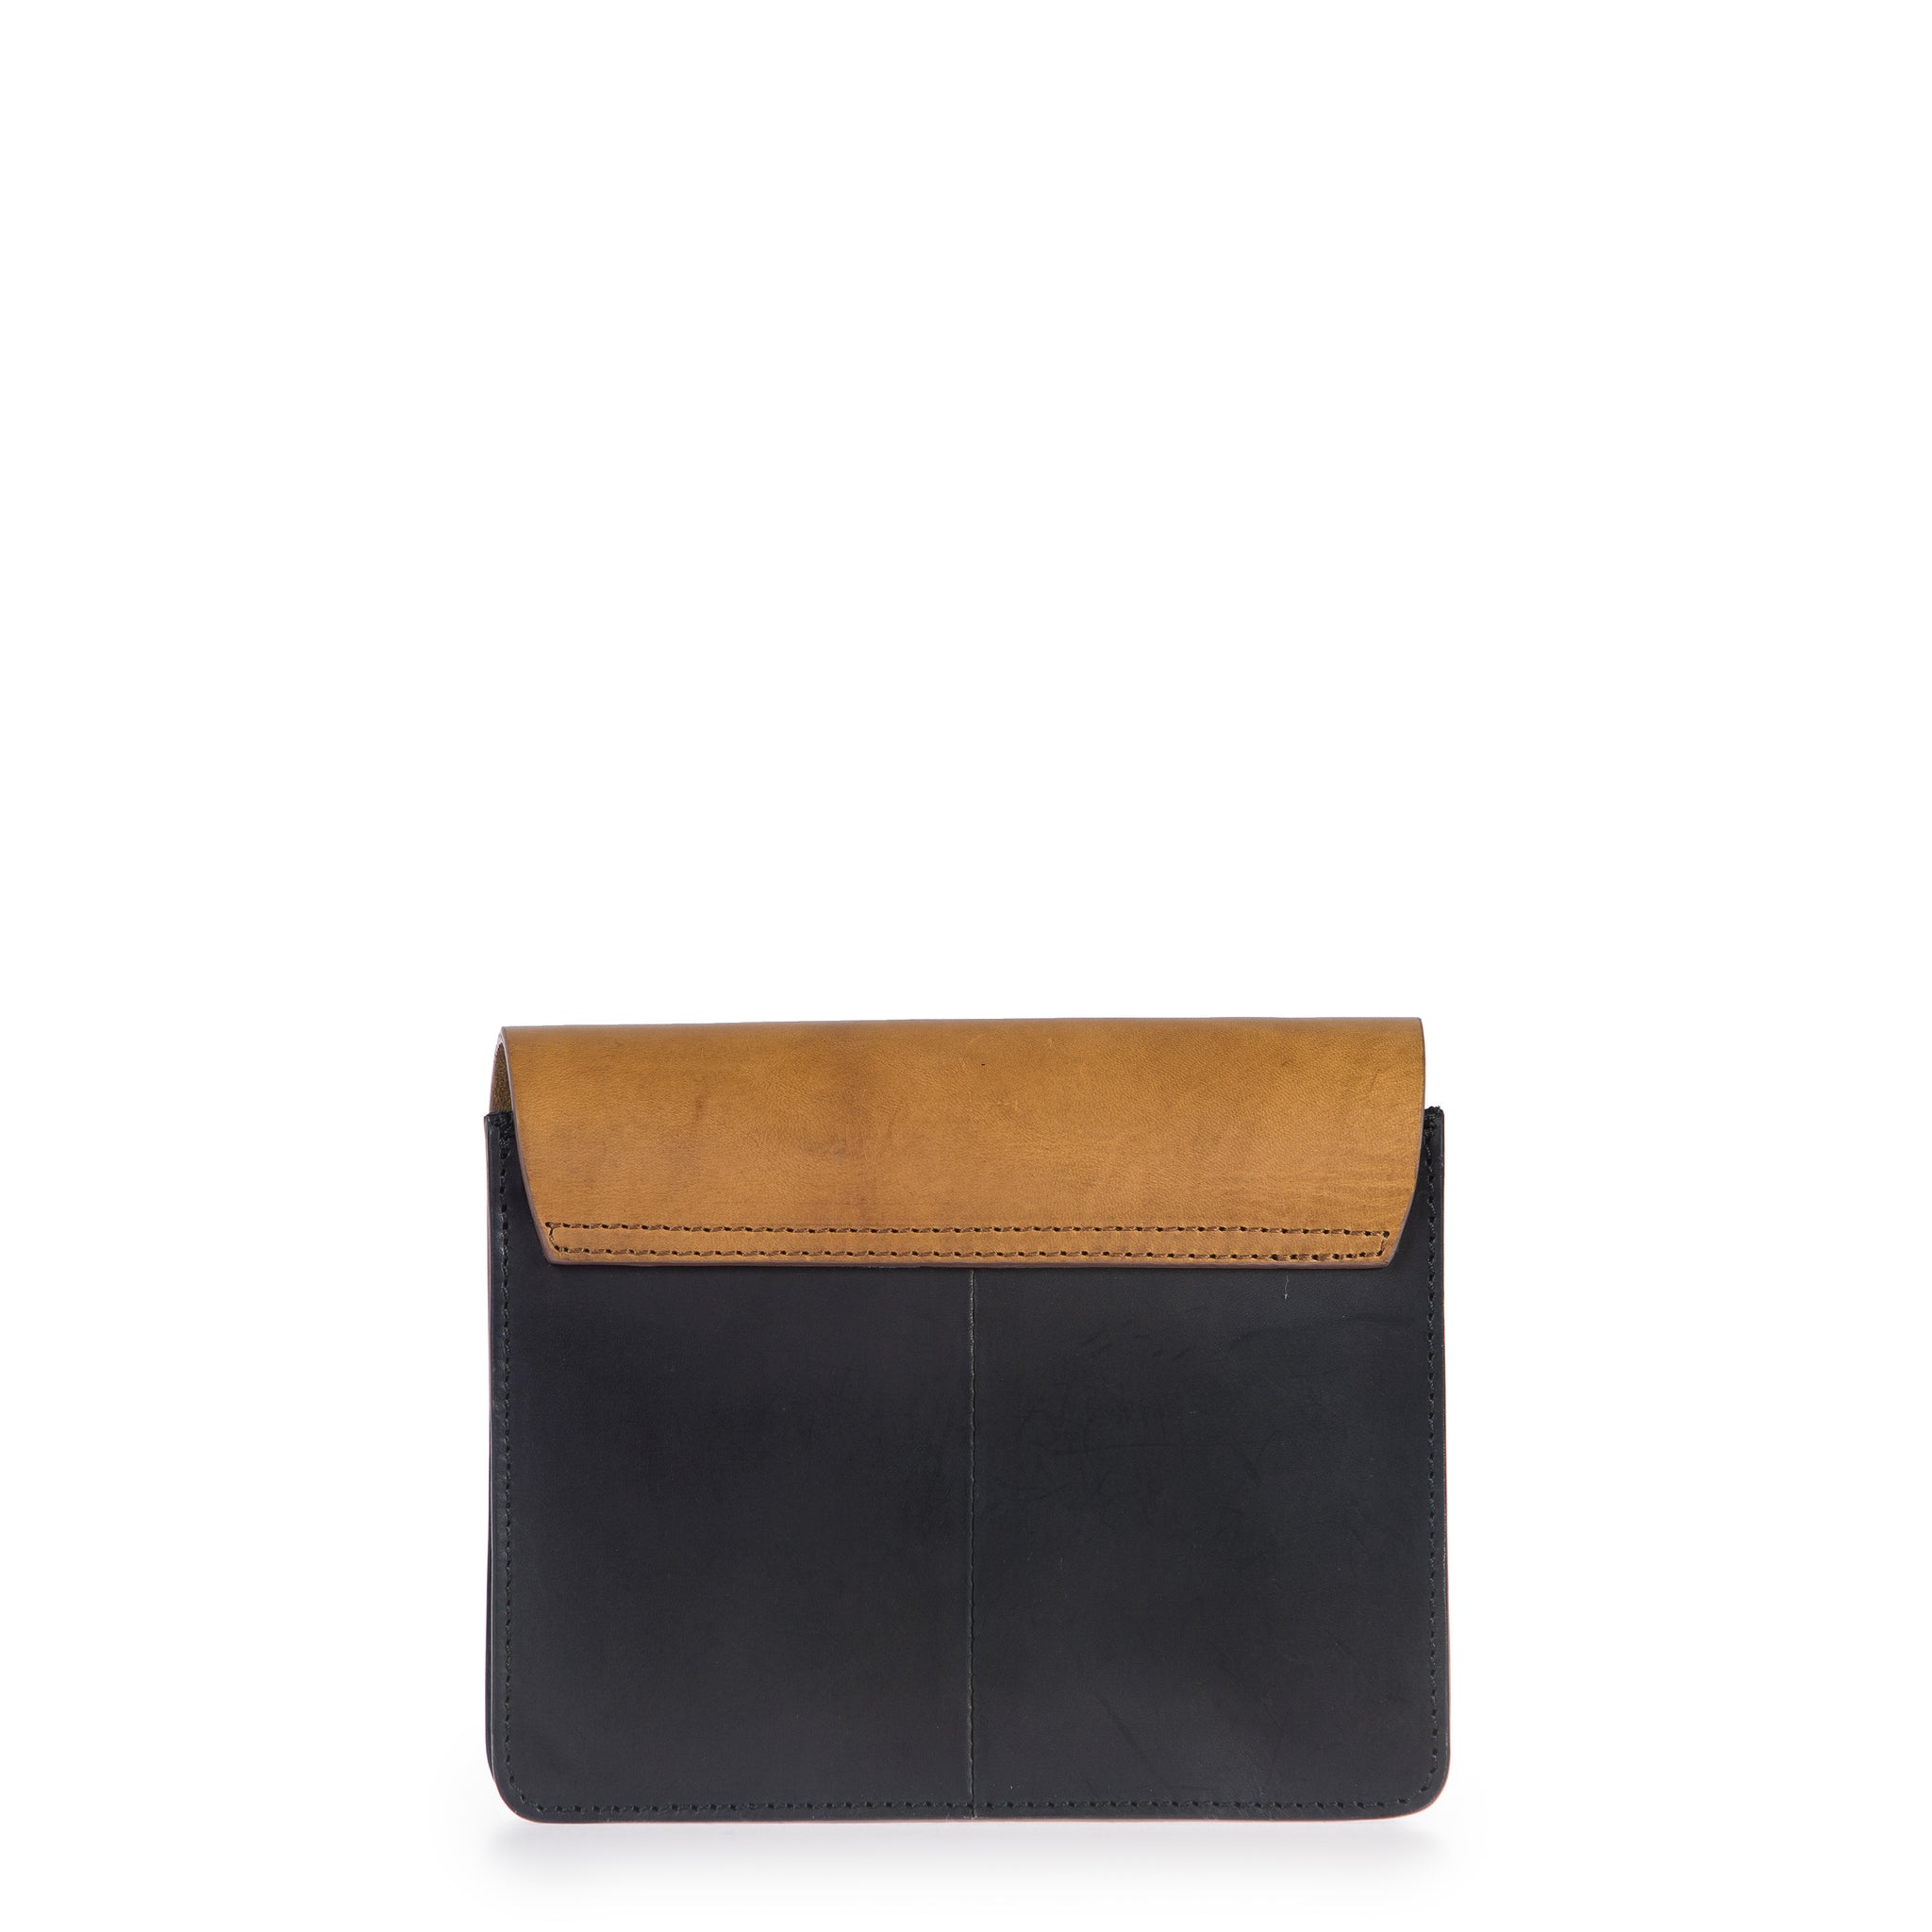 Audrey Mini Black/Cognac Classic Leather